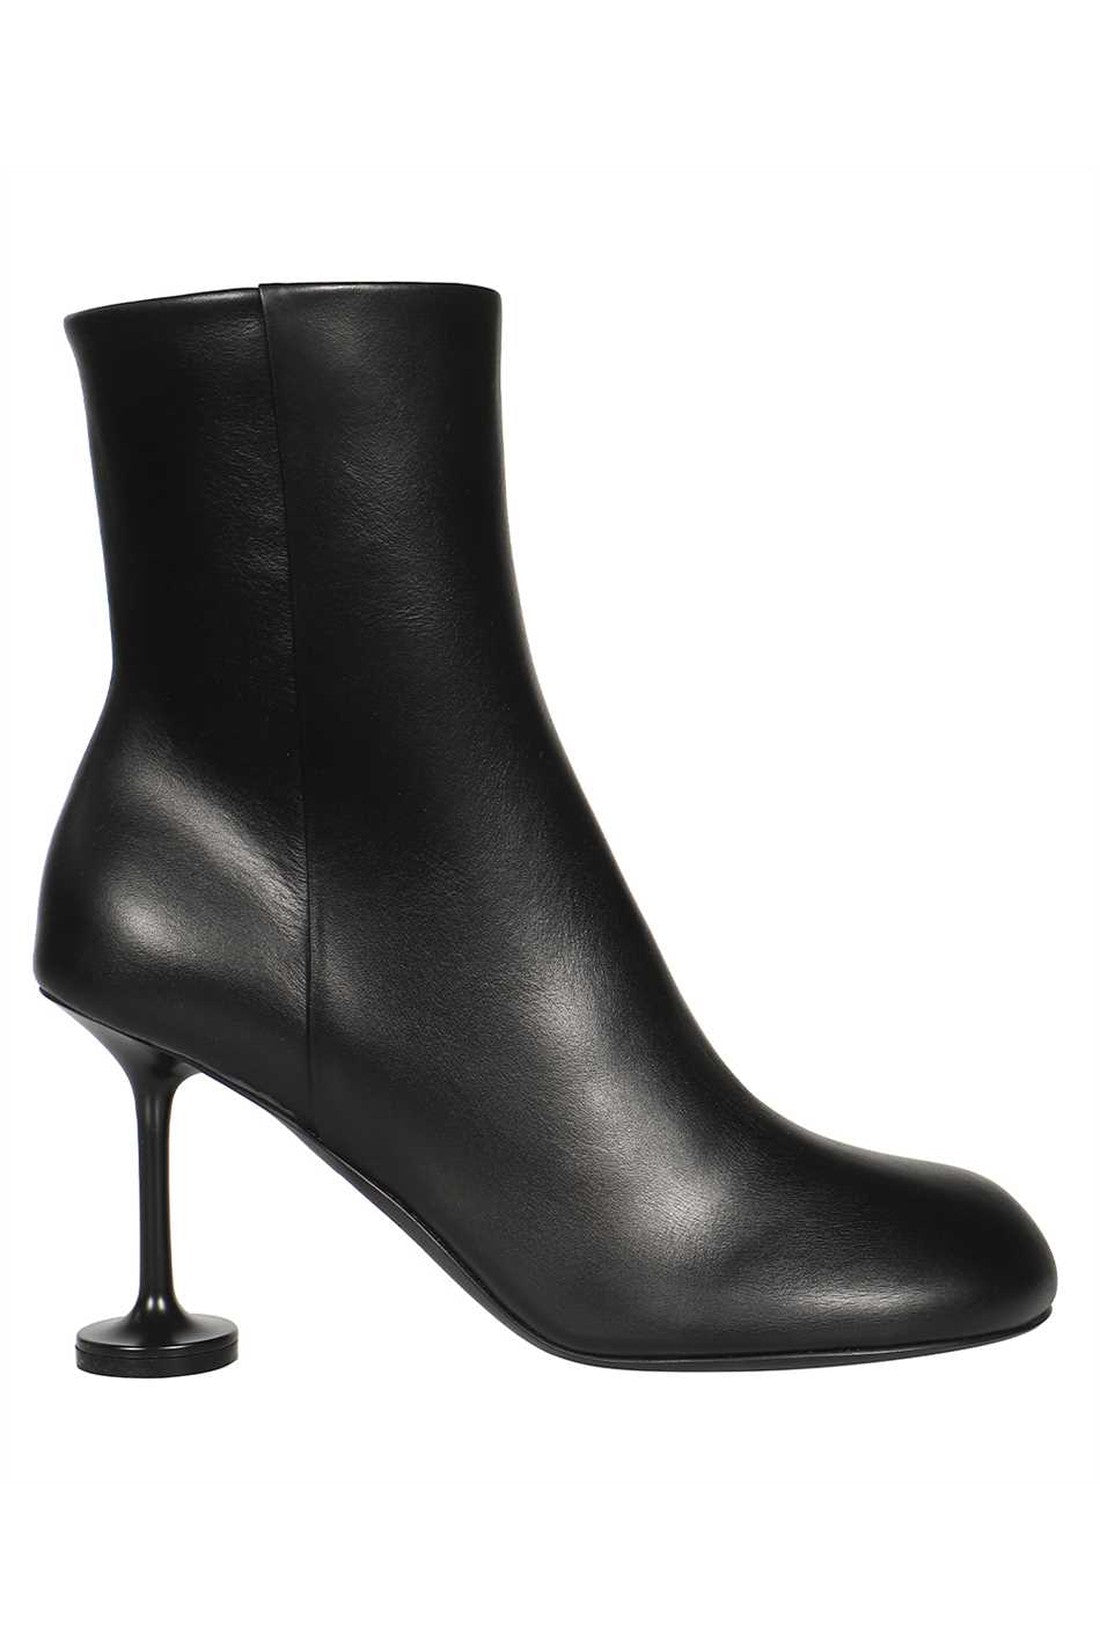 Leather ankle boots-Balenciaga-OUTLET-SALE-35-ARCHIVIST